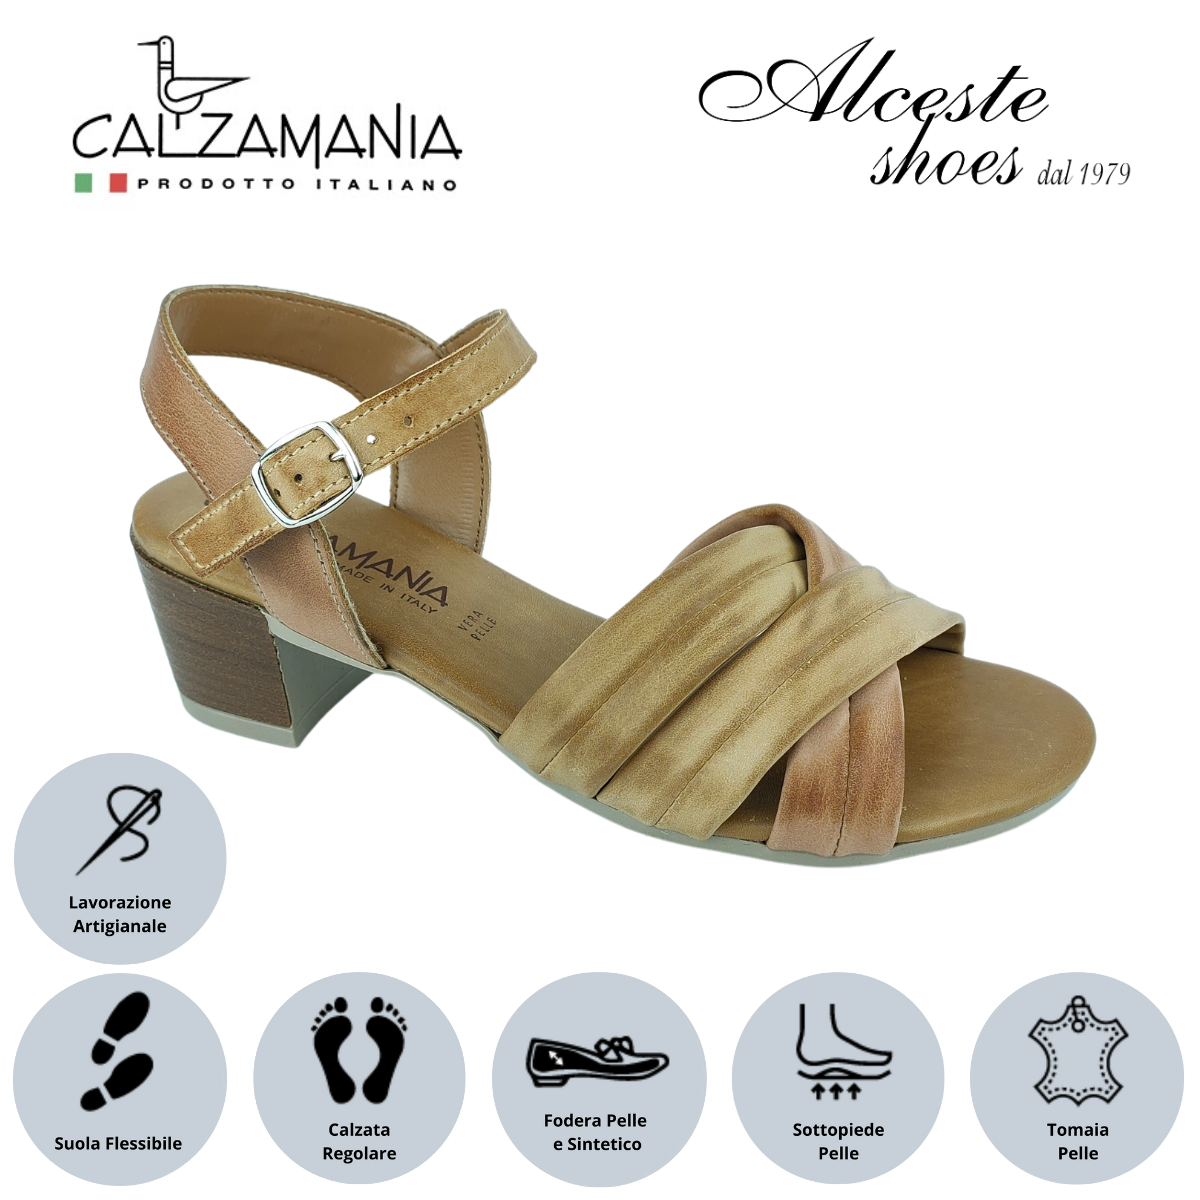 Sandalo Donna con Tacco 5 cm "Calzamania" Art. 23867 Pelle Cuoio Alceste Shoes 22 1